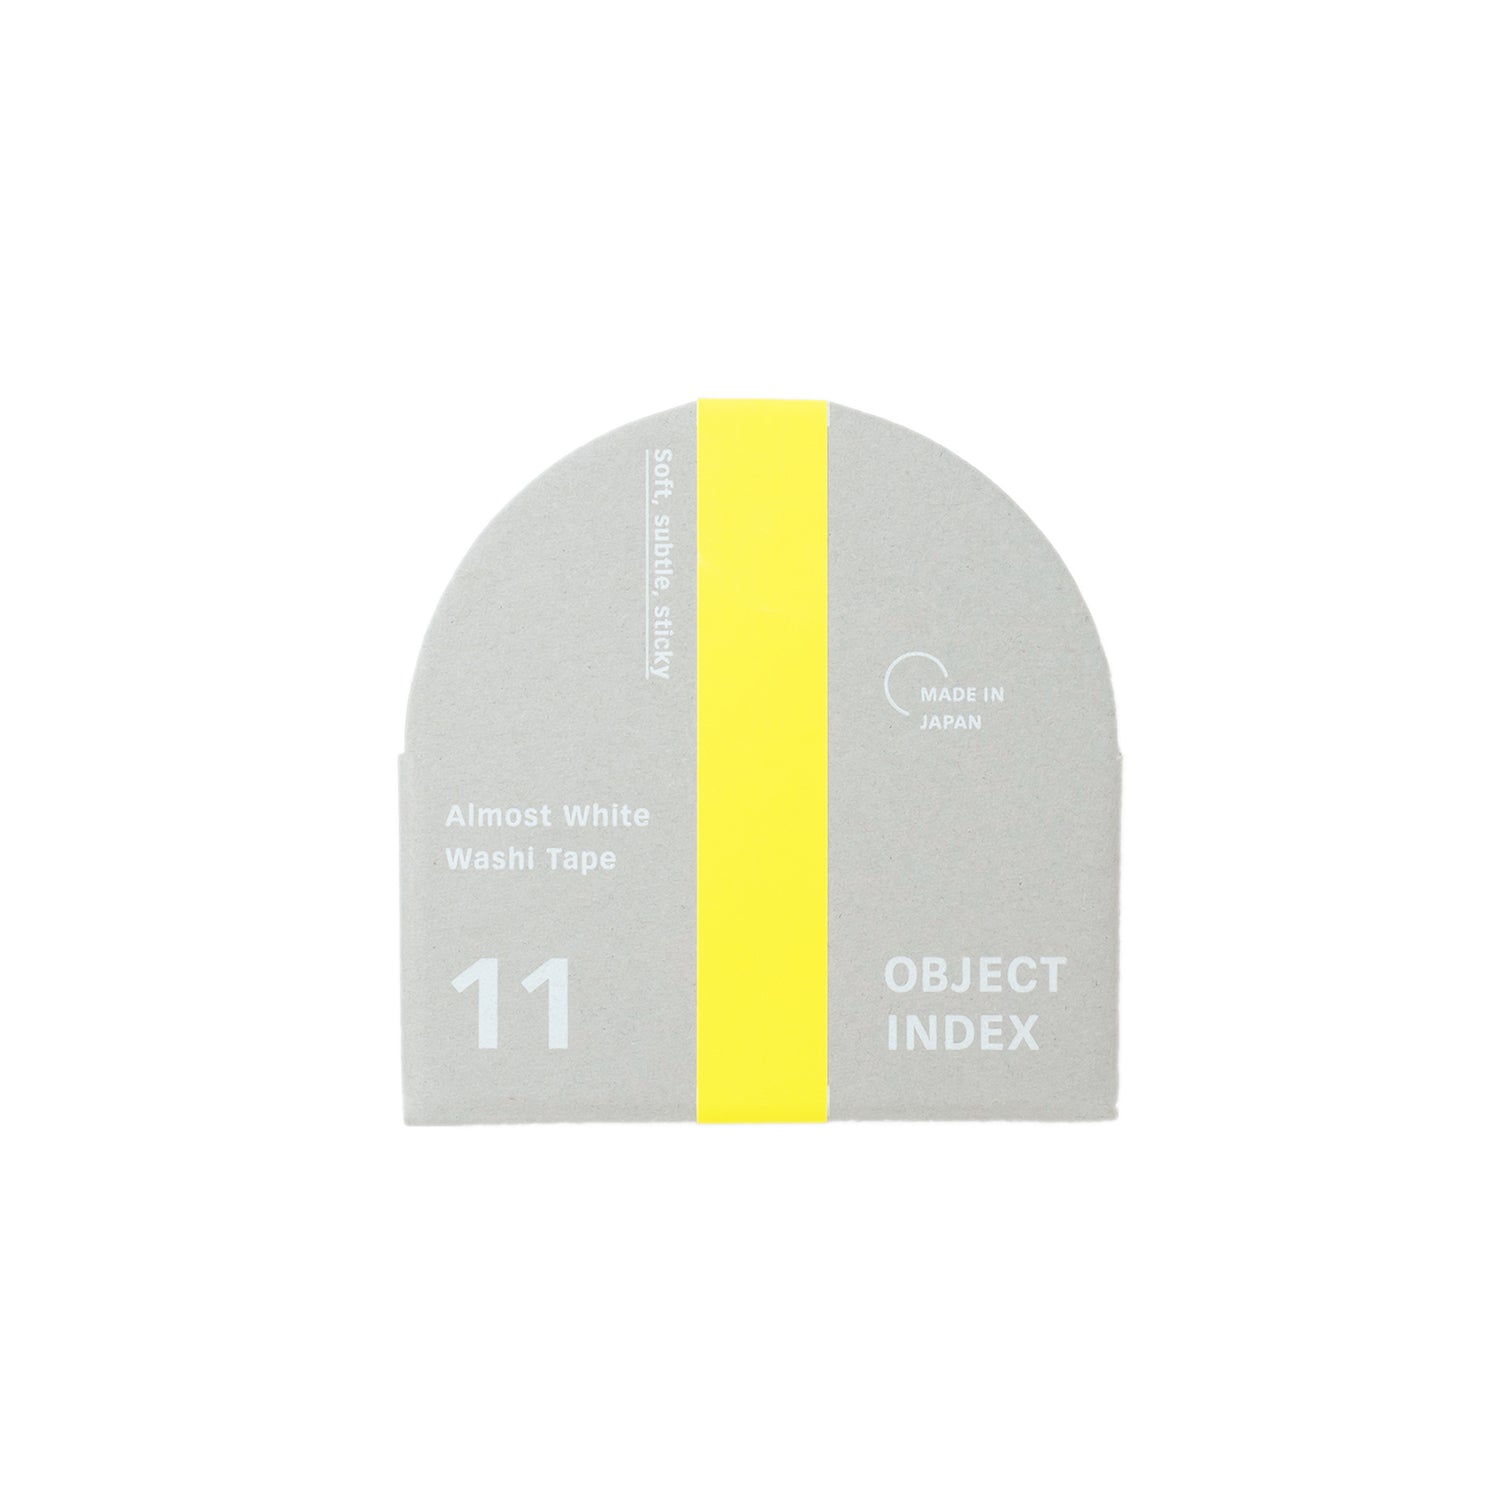 Almost White Washi Tape - Large - Set of Three Kakimori Object Index Packaging